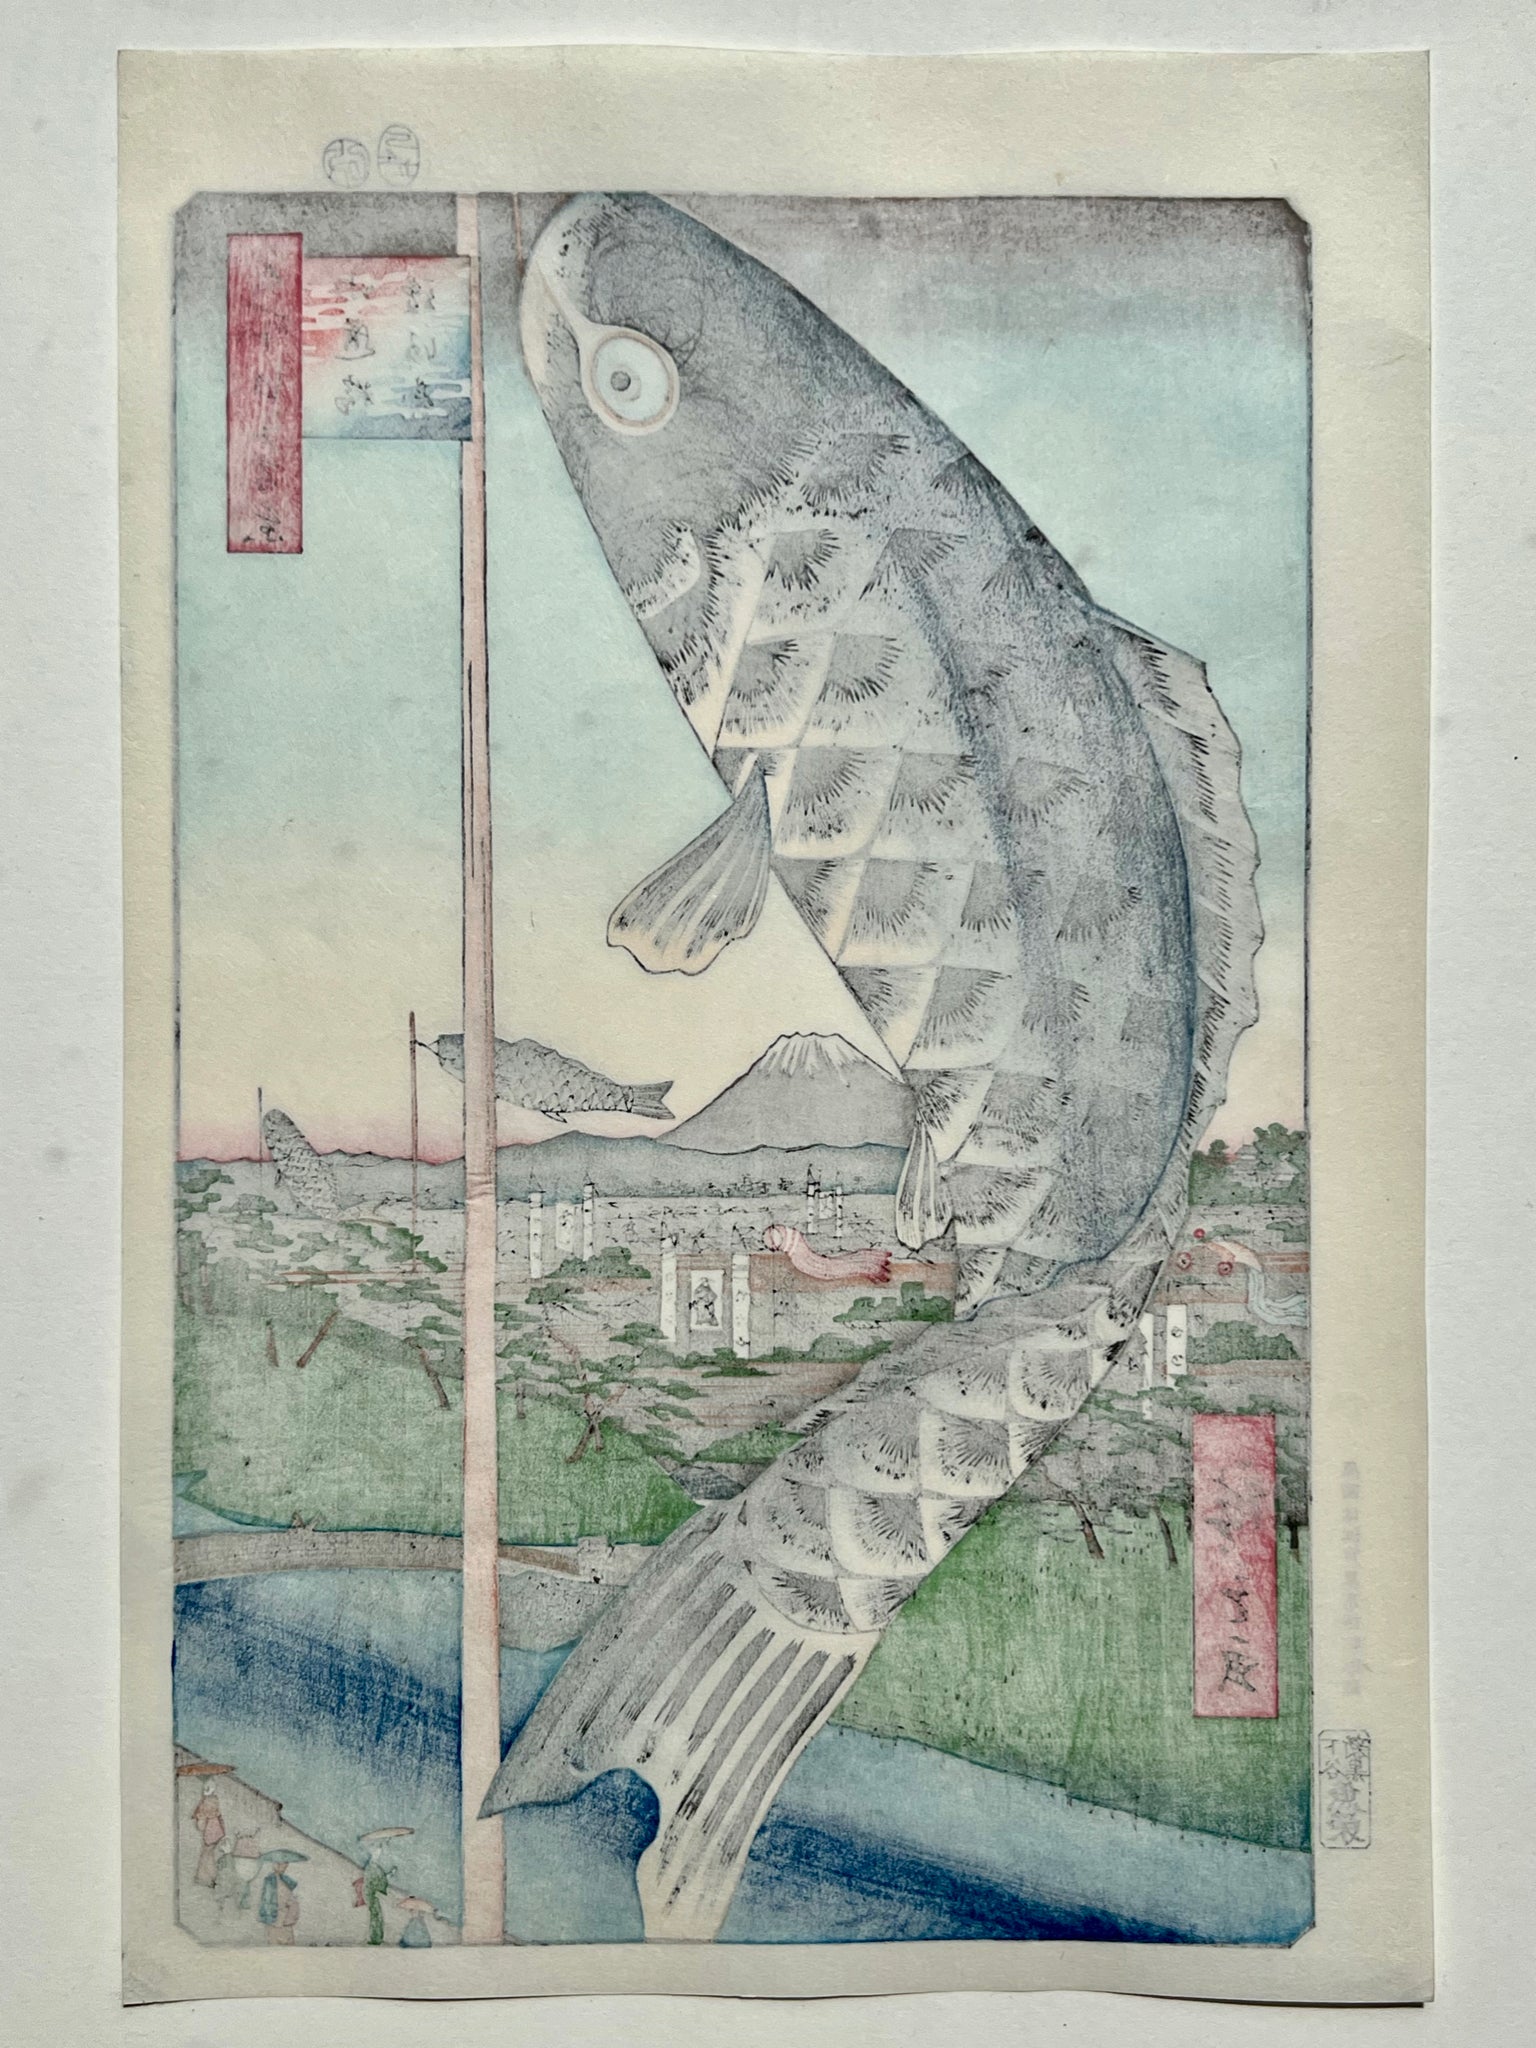     hiroshige-serie-100-vues-edo-suidobashi-koinobori-hi23-01  1536 × 2048 px  estampe japonaise carpe koi en banniere, dos de l'estampe